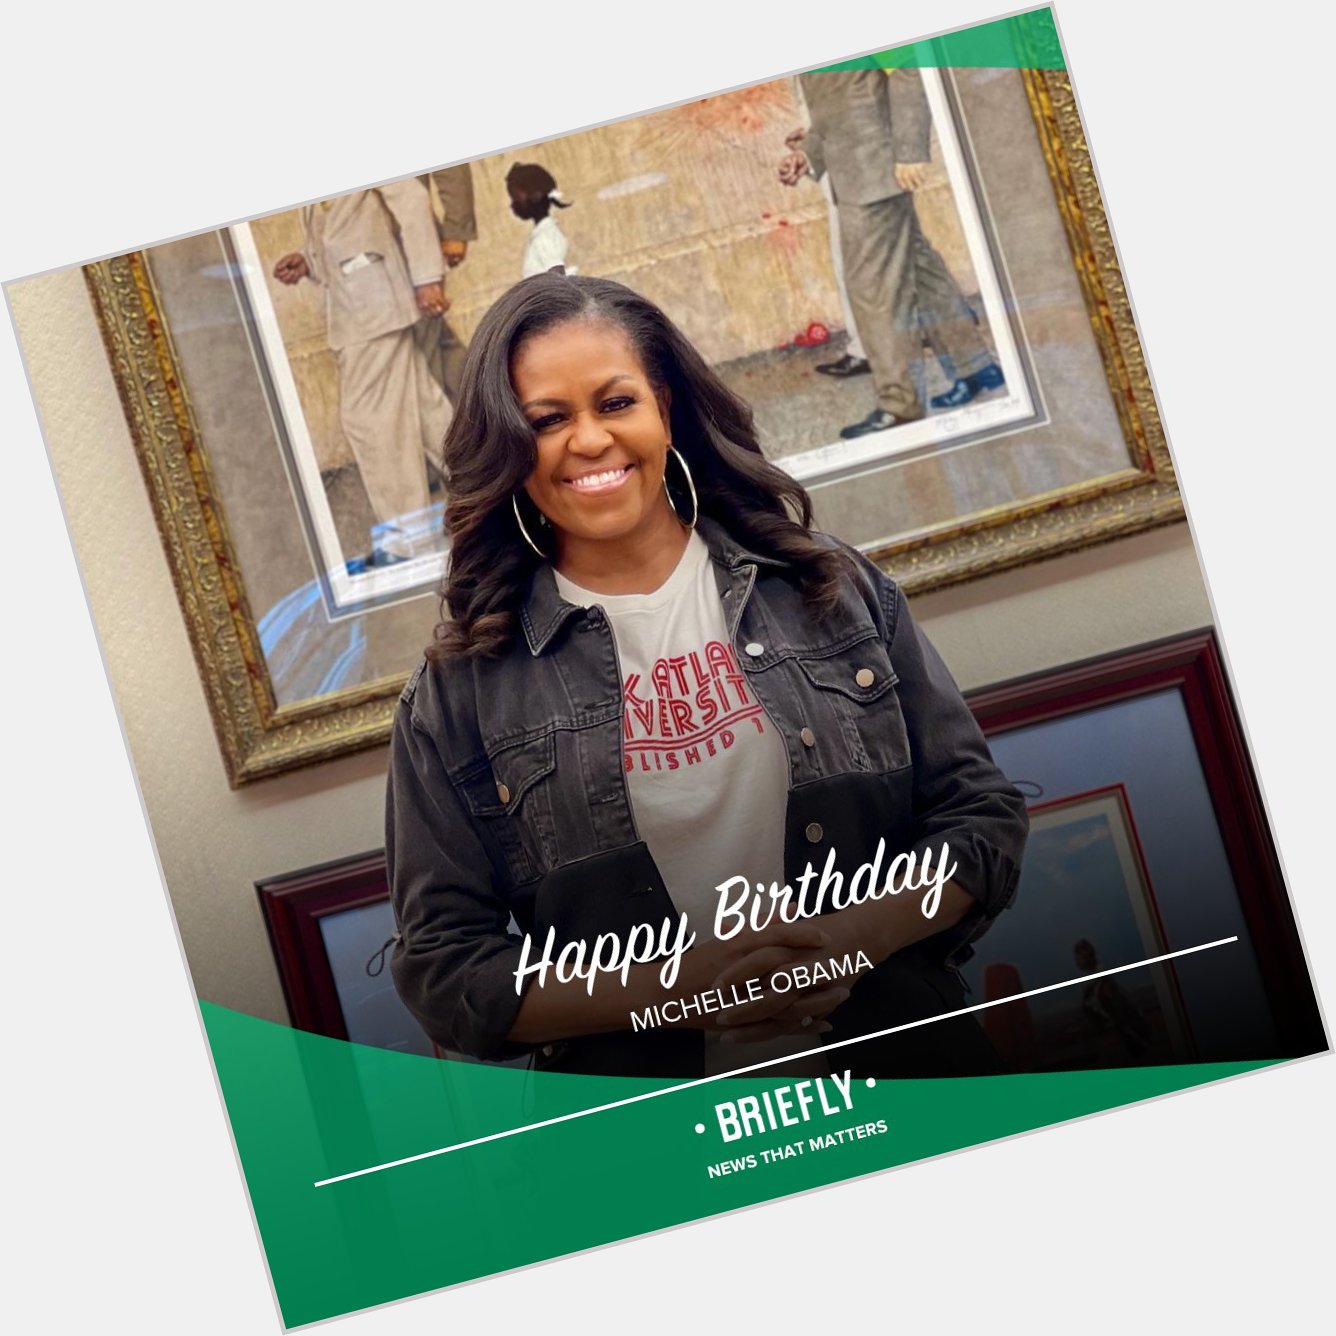 Today Michelle Obama celebrates her birthday. Happy birthday, Michelle.   